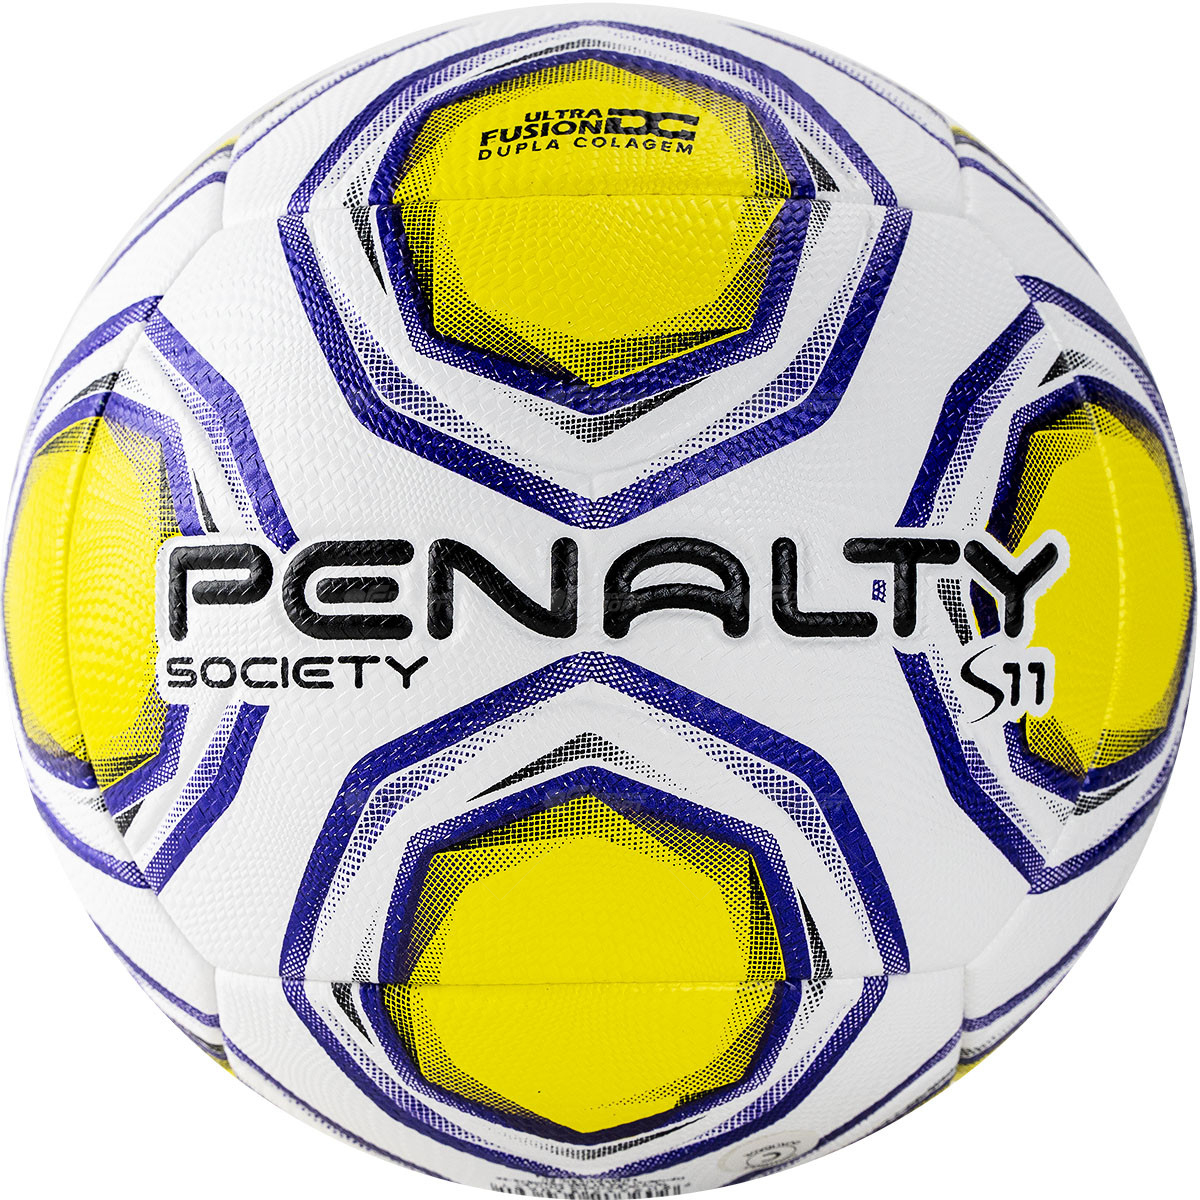 Мяч ф/б Penalty Bola Society S11 R2 XXI арт.5213081463-U р.5